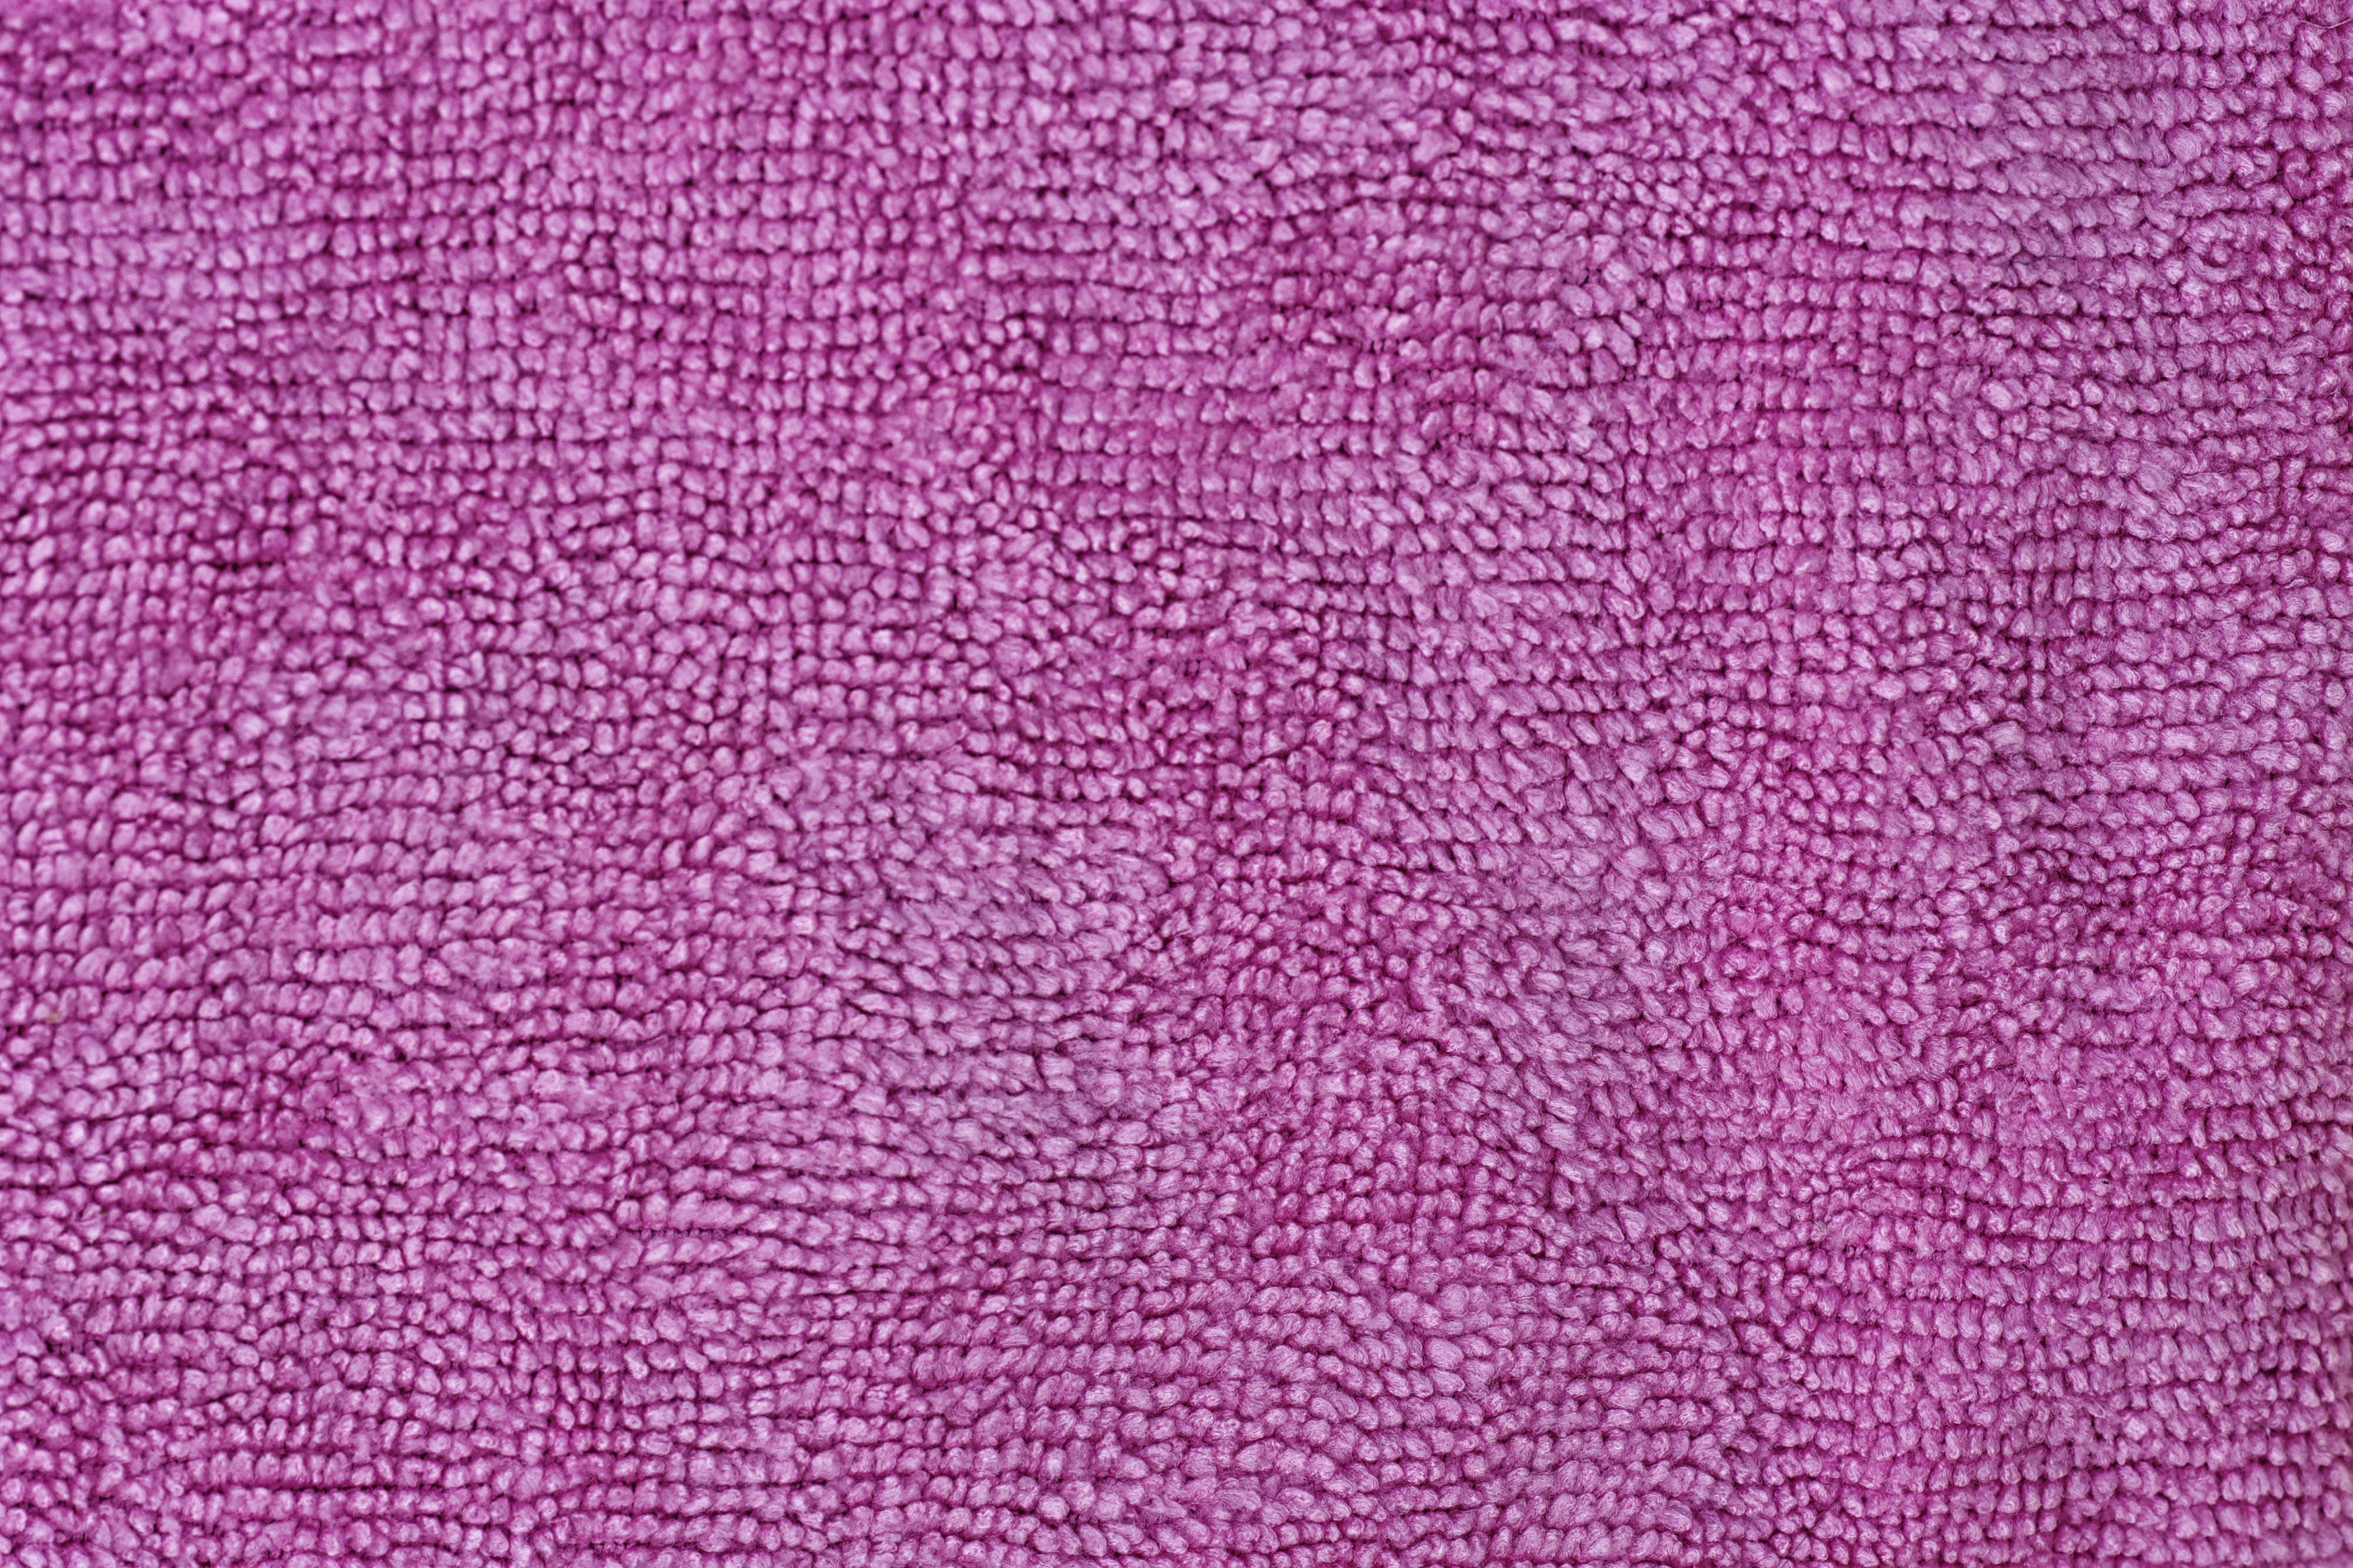 Three closeup pink towel textures | www.myfreetextures.com ...
